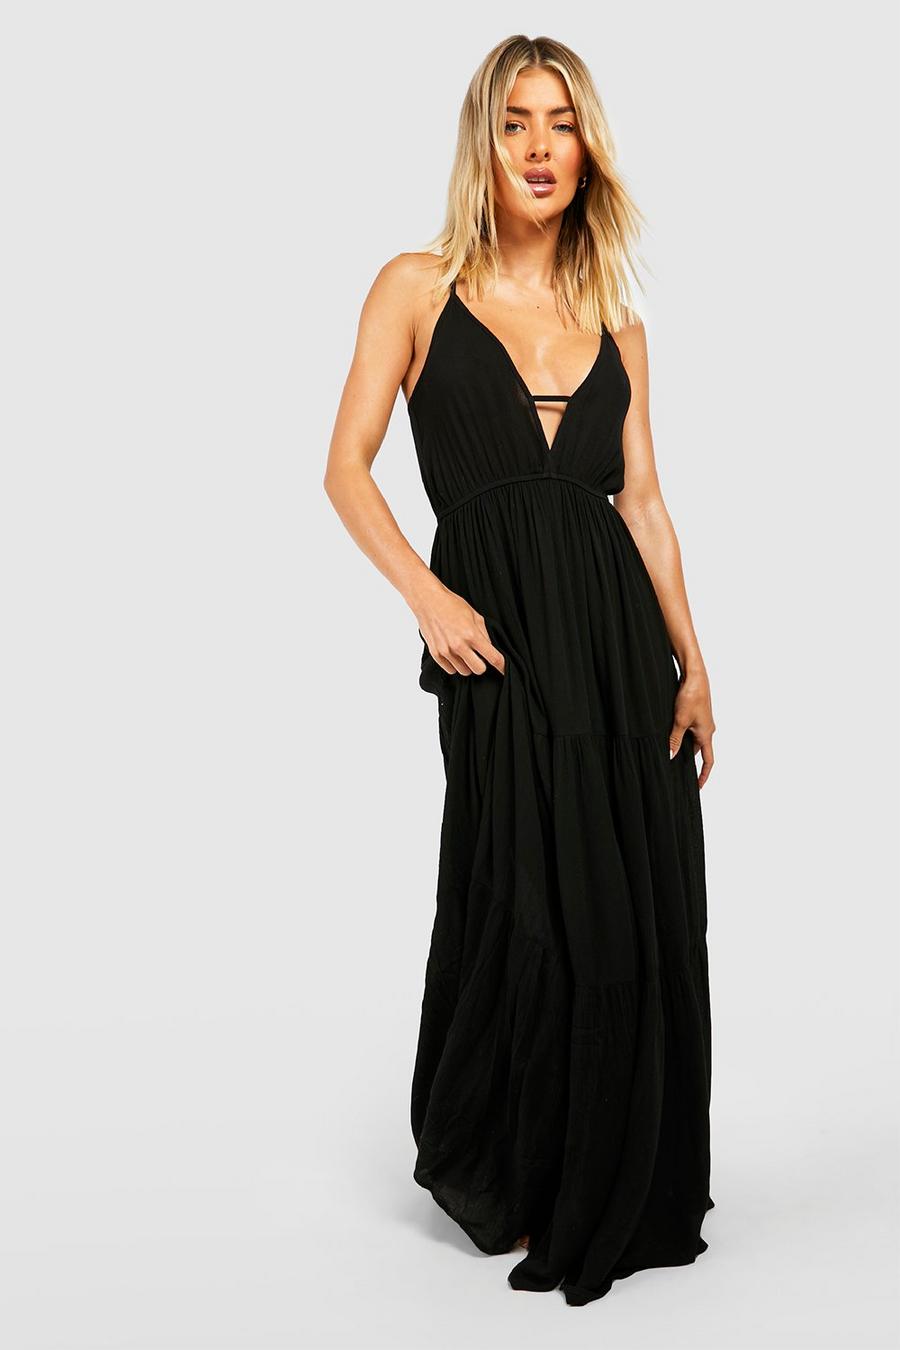 Black שמלת מקסי לחוף מבד בר קיימא מקומט עם מחשוף